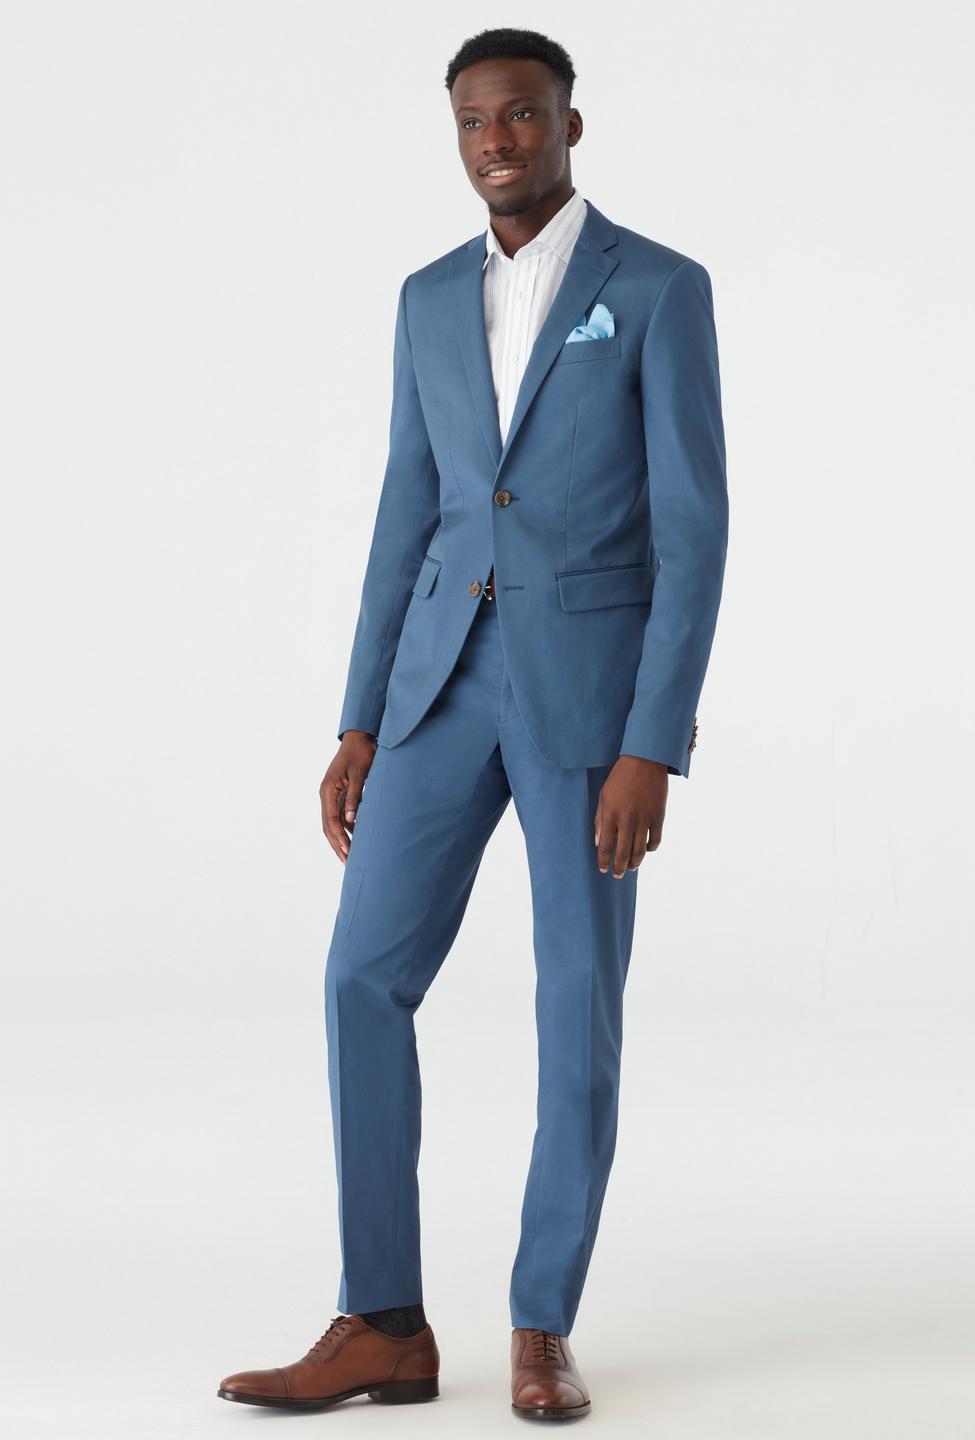 Blue blazer - Solid Design from Premium Indochino Collection